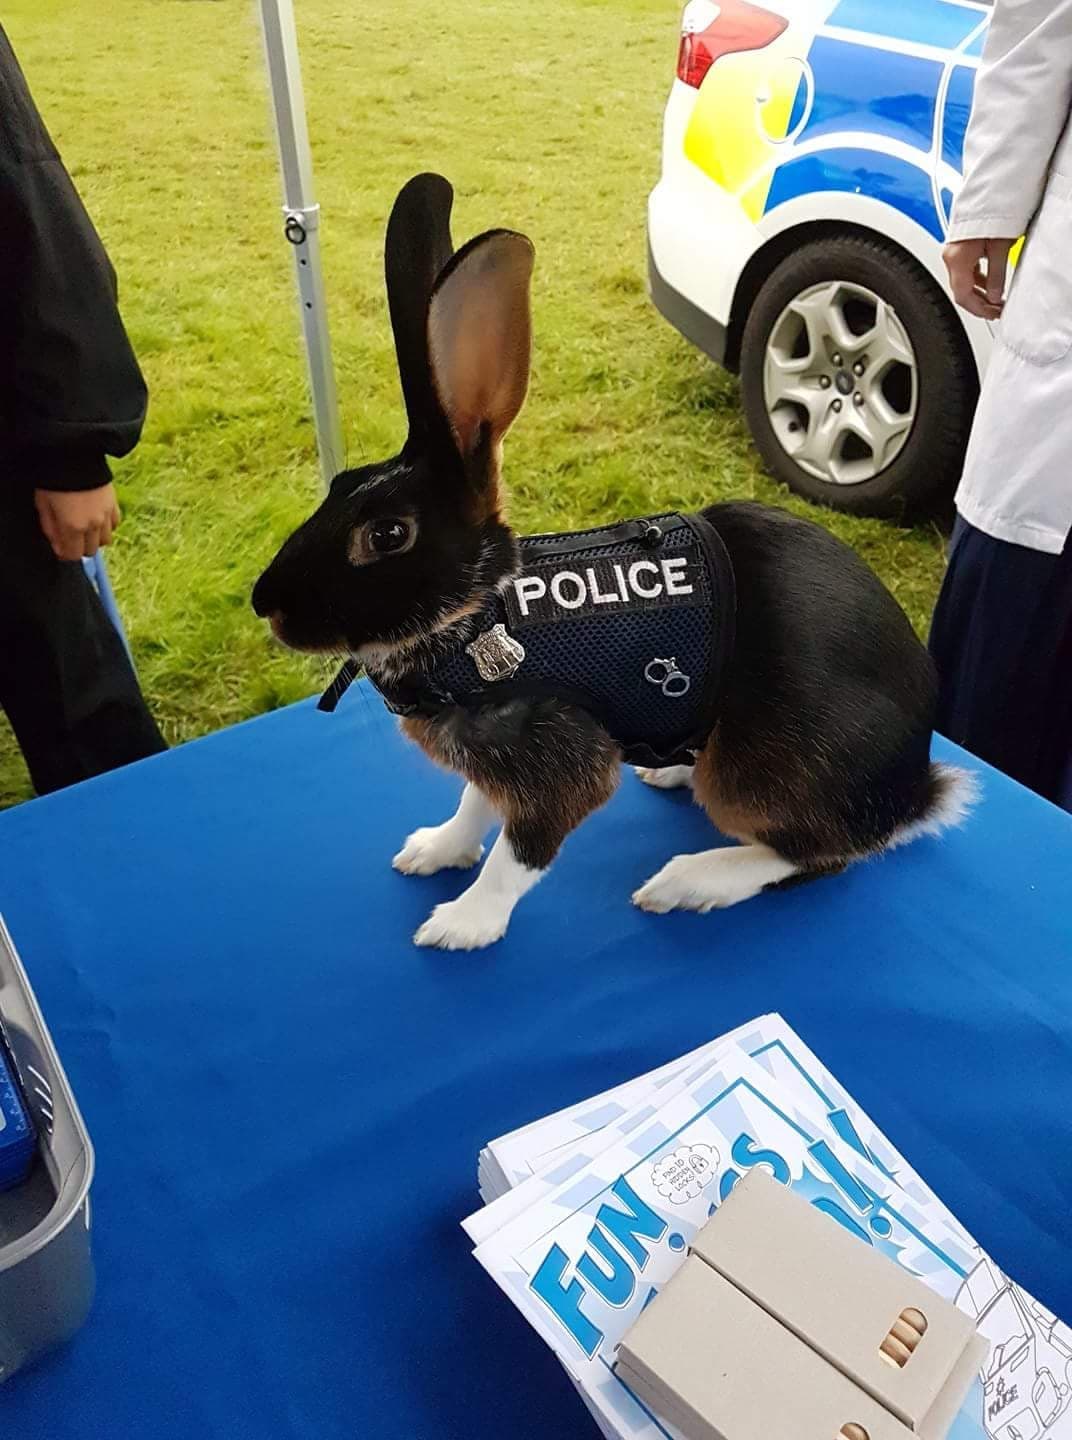 Police bun has hops.